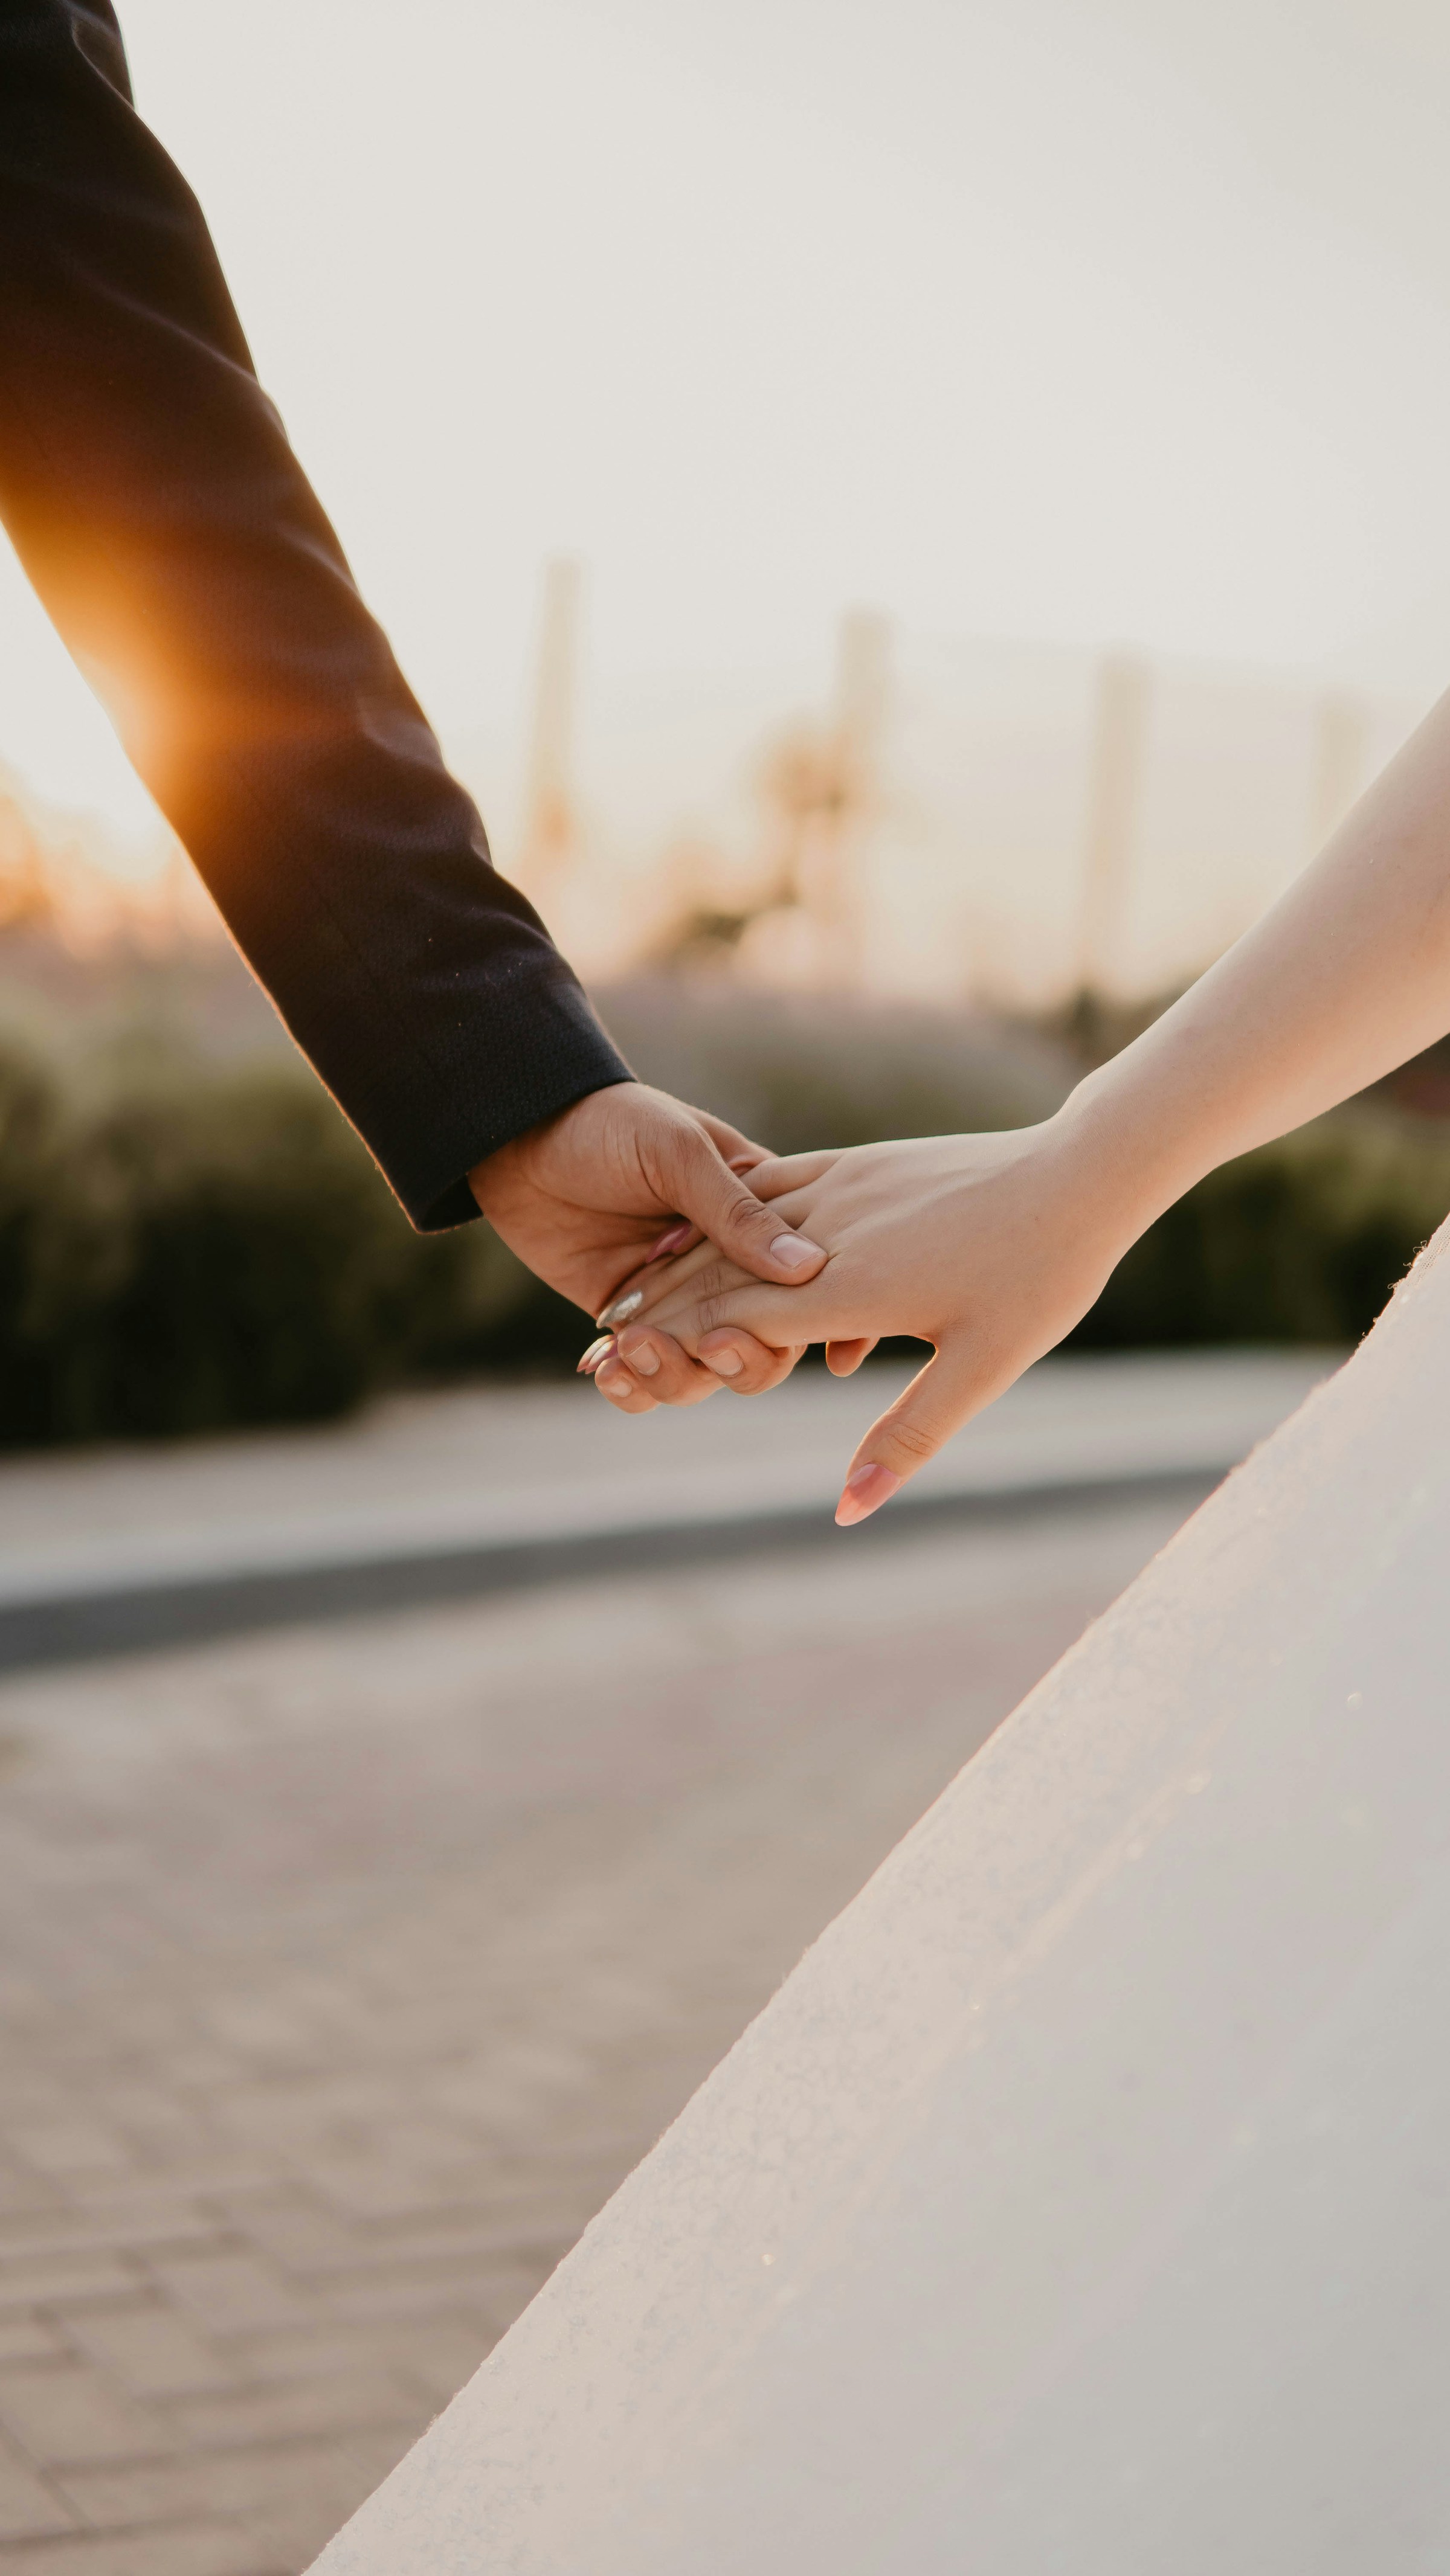 A bride and groom holding hands | Source: Unsplash